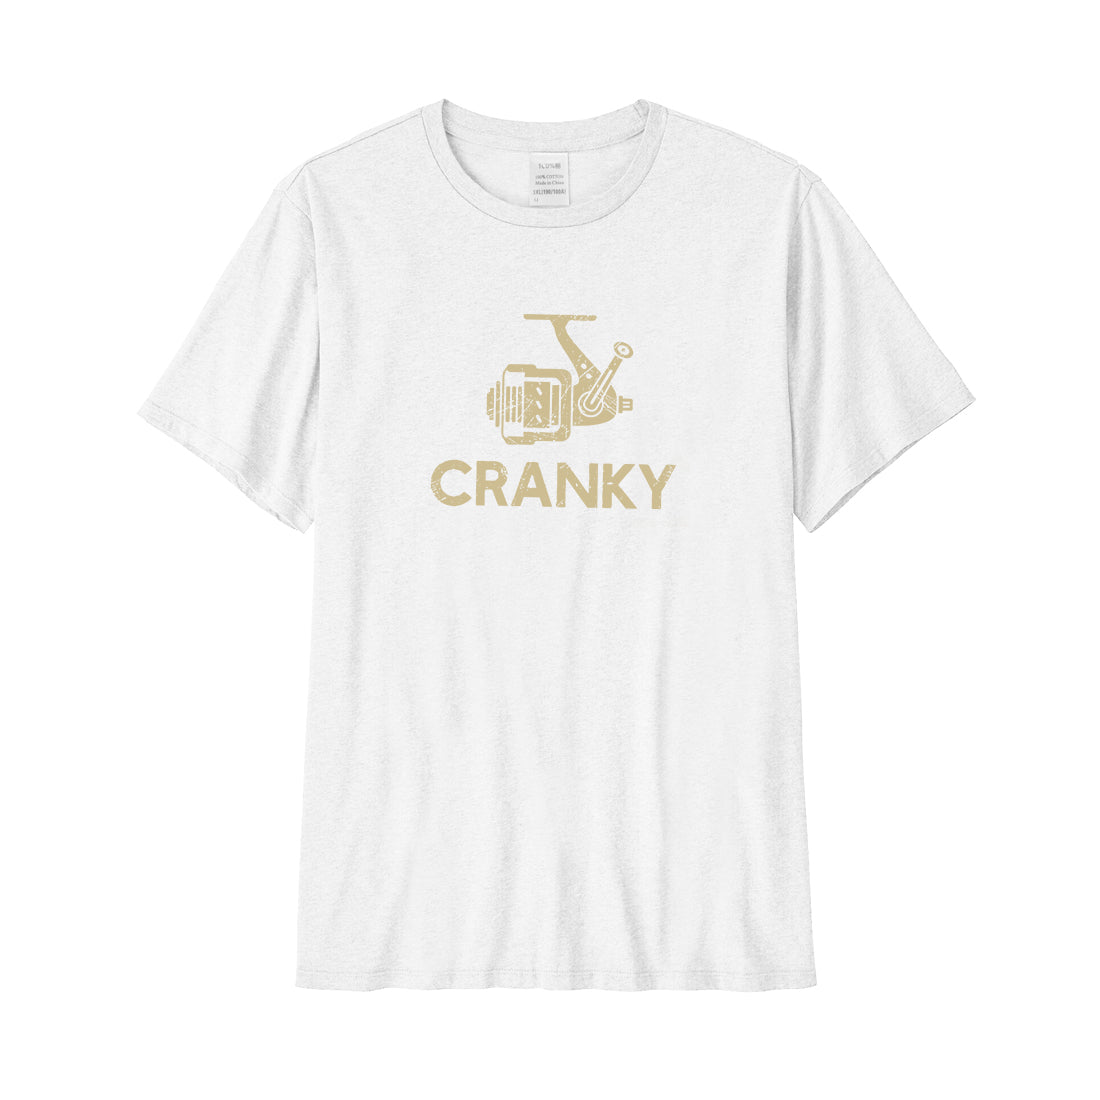 CRANKY FISHING Performance T-Shirt